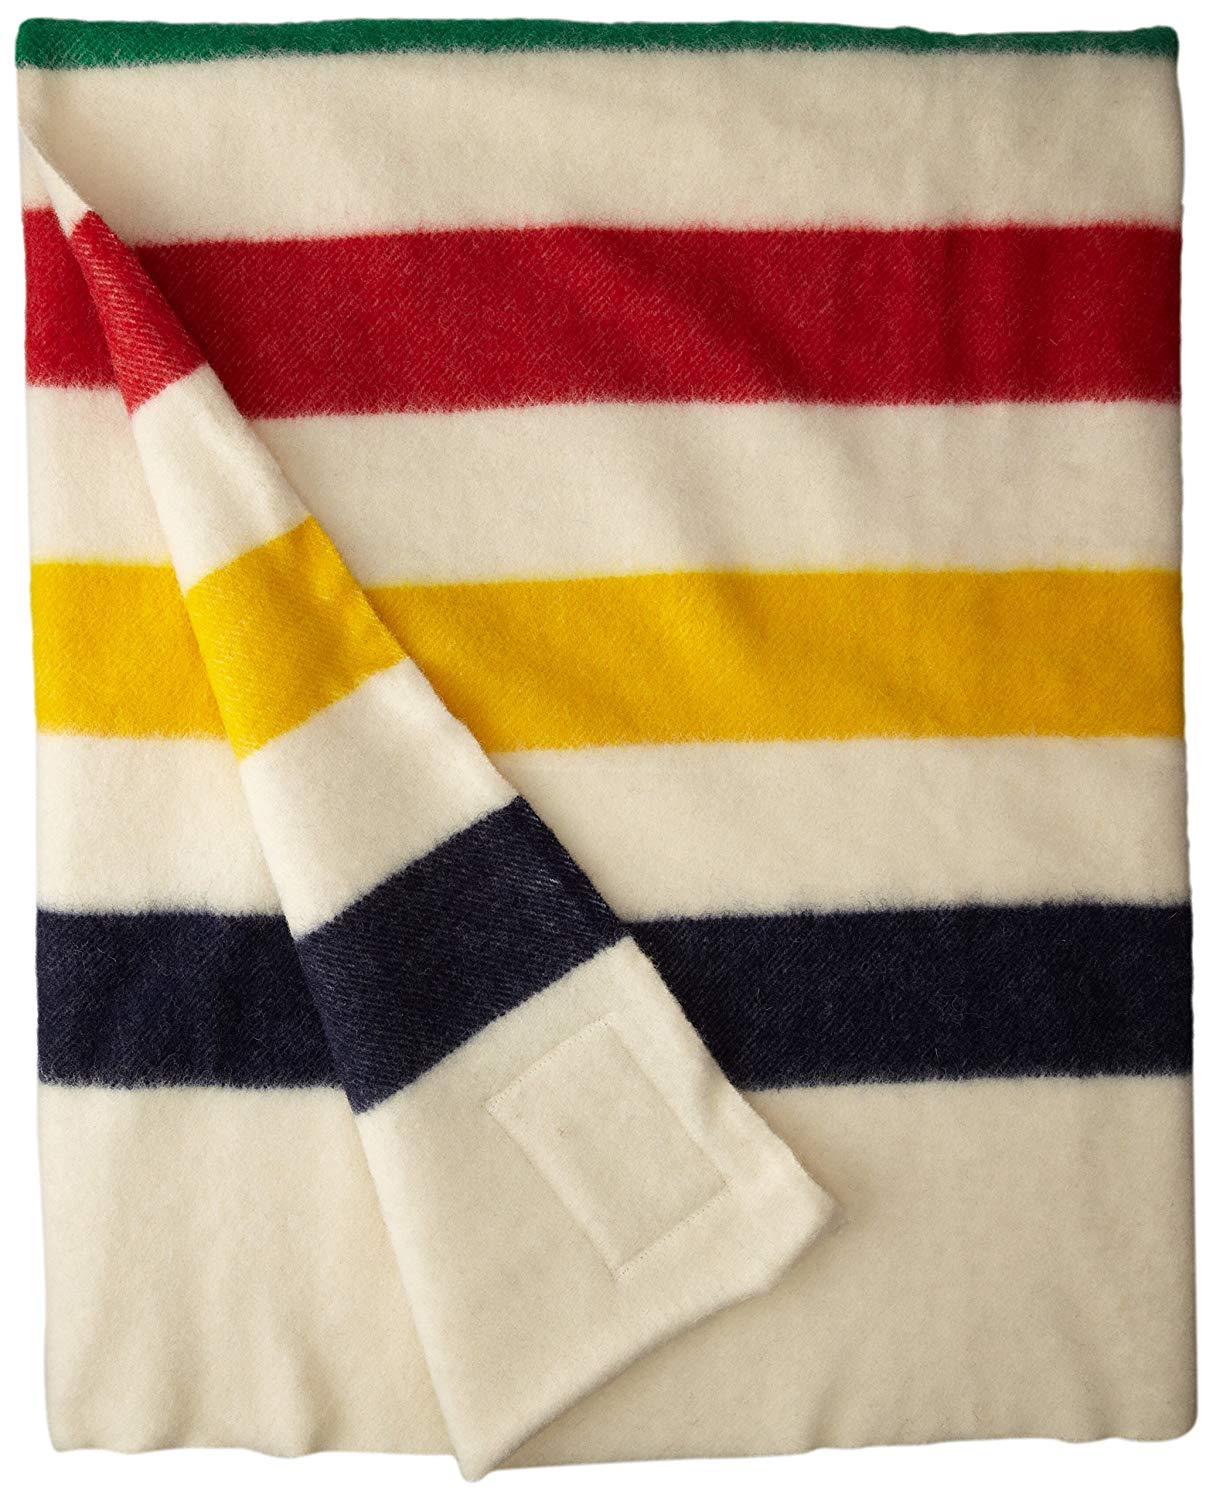 Hudson Bay 4 Point Blanket Product Image